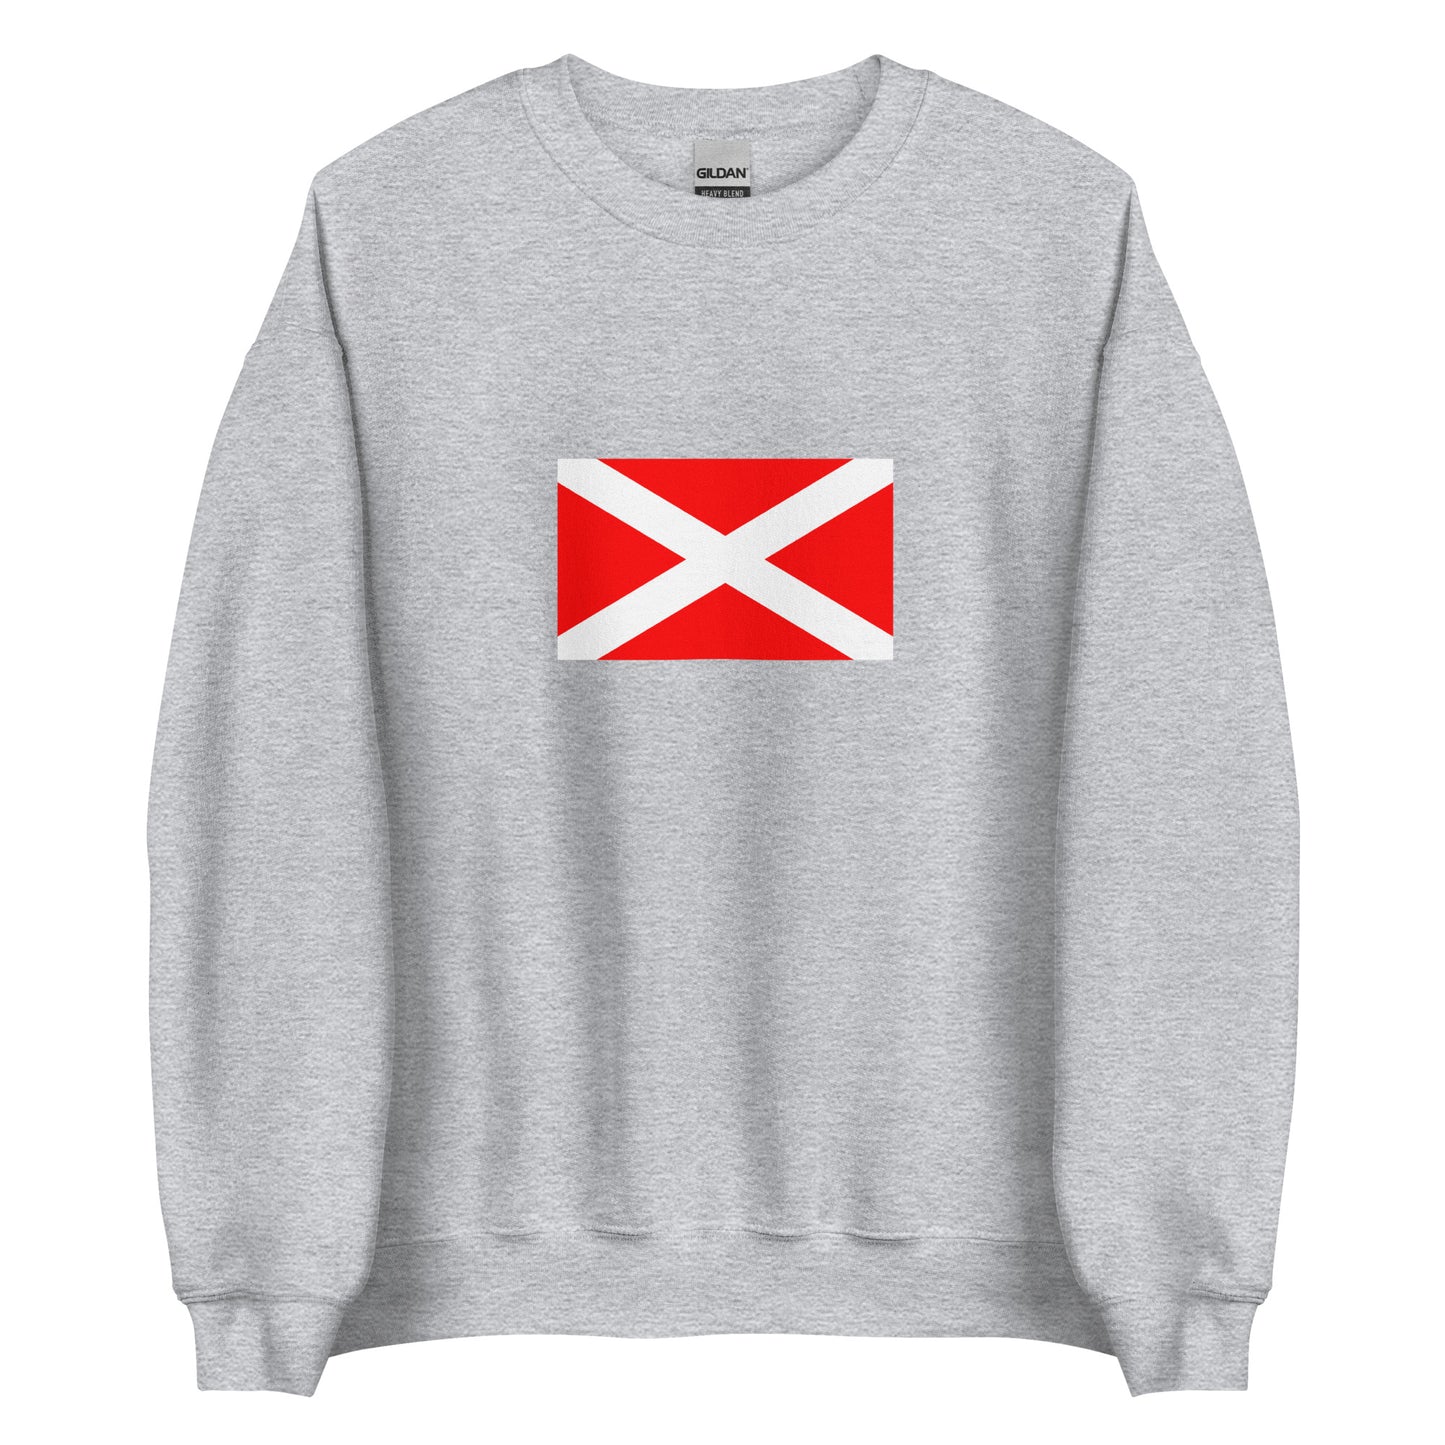 France - Gascon people | Ethnic French Flag Interactive Sweatshirt